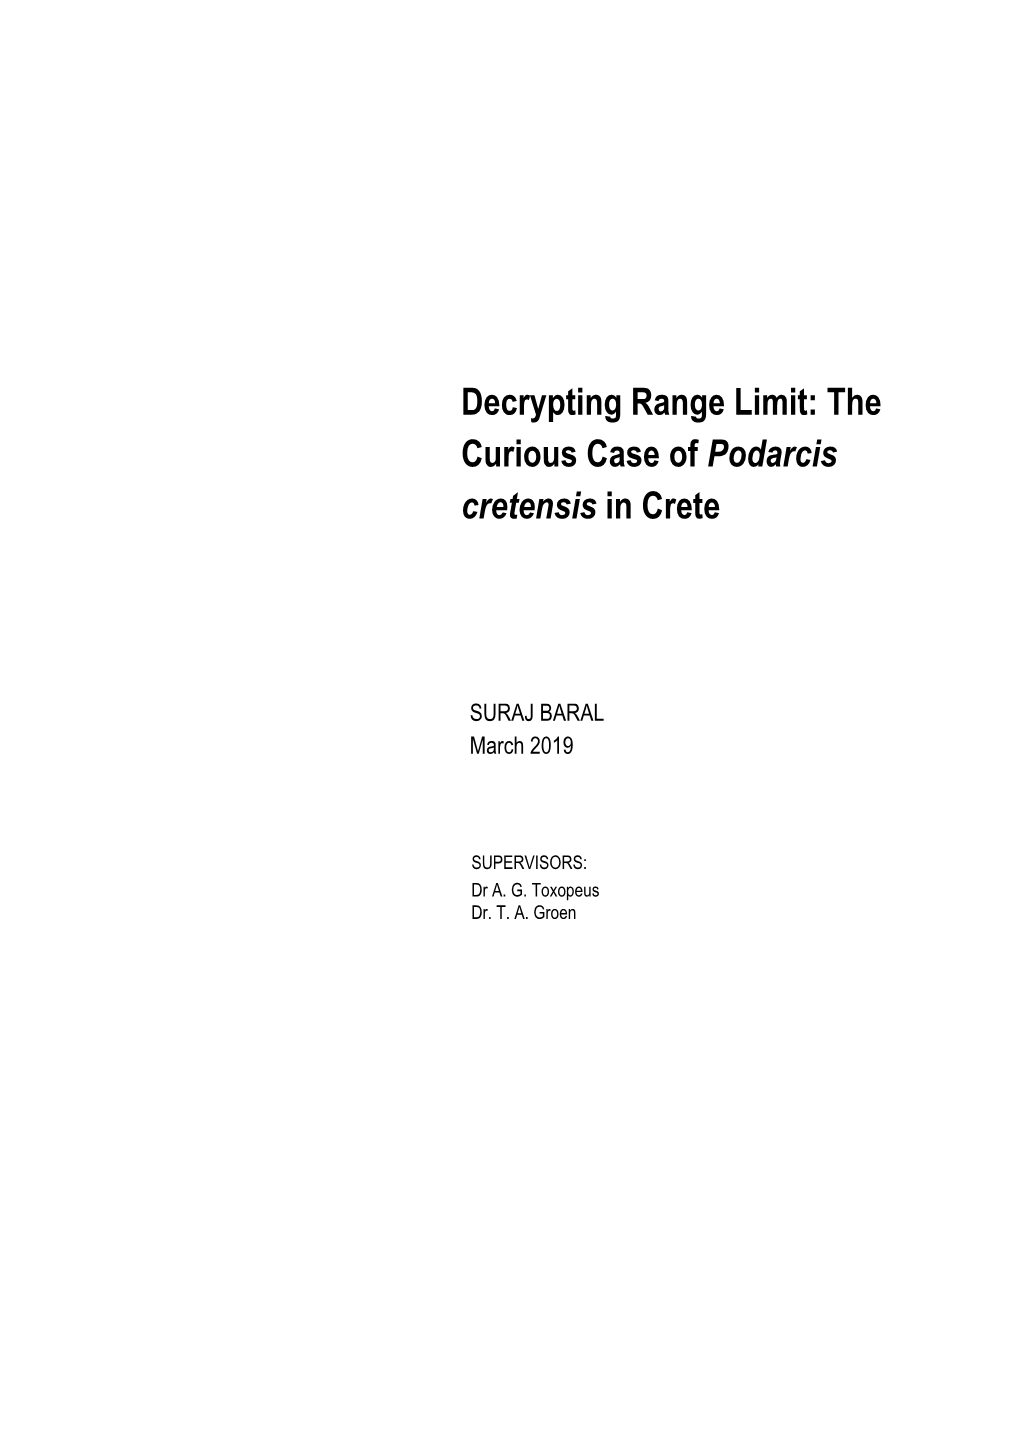 Decrypting Range Limit: the Curious Case of Podarcis Cretensis in Crete